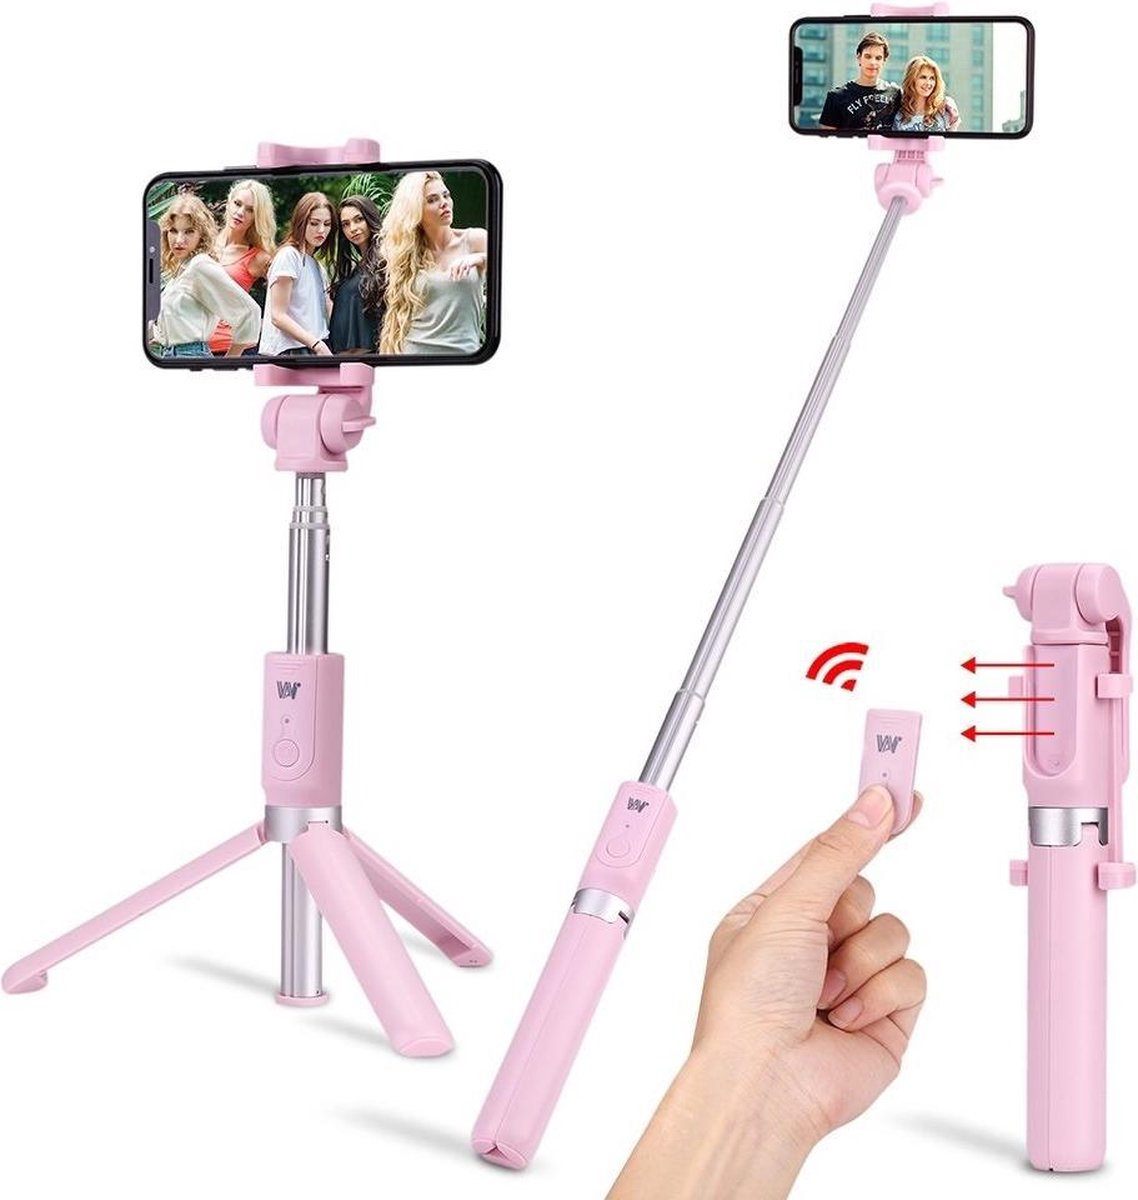 Ntech 3 in 1 Selfie Stick met Afstandsbediening en Foldable Tripod Stand Samsung Galaxy S10/S10+/S10e A50/A70/A70s/A40/A30/A7(2018) - Roze